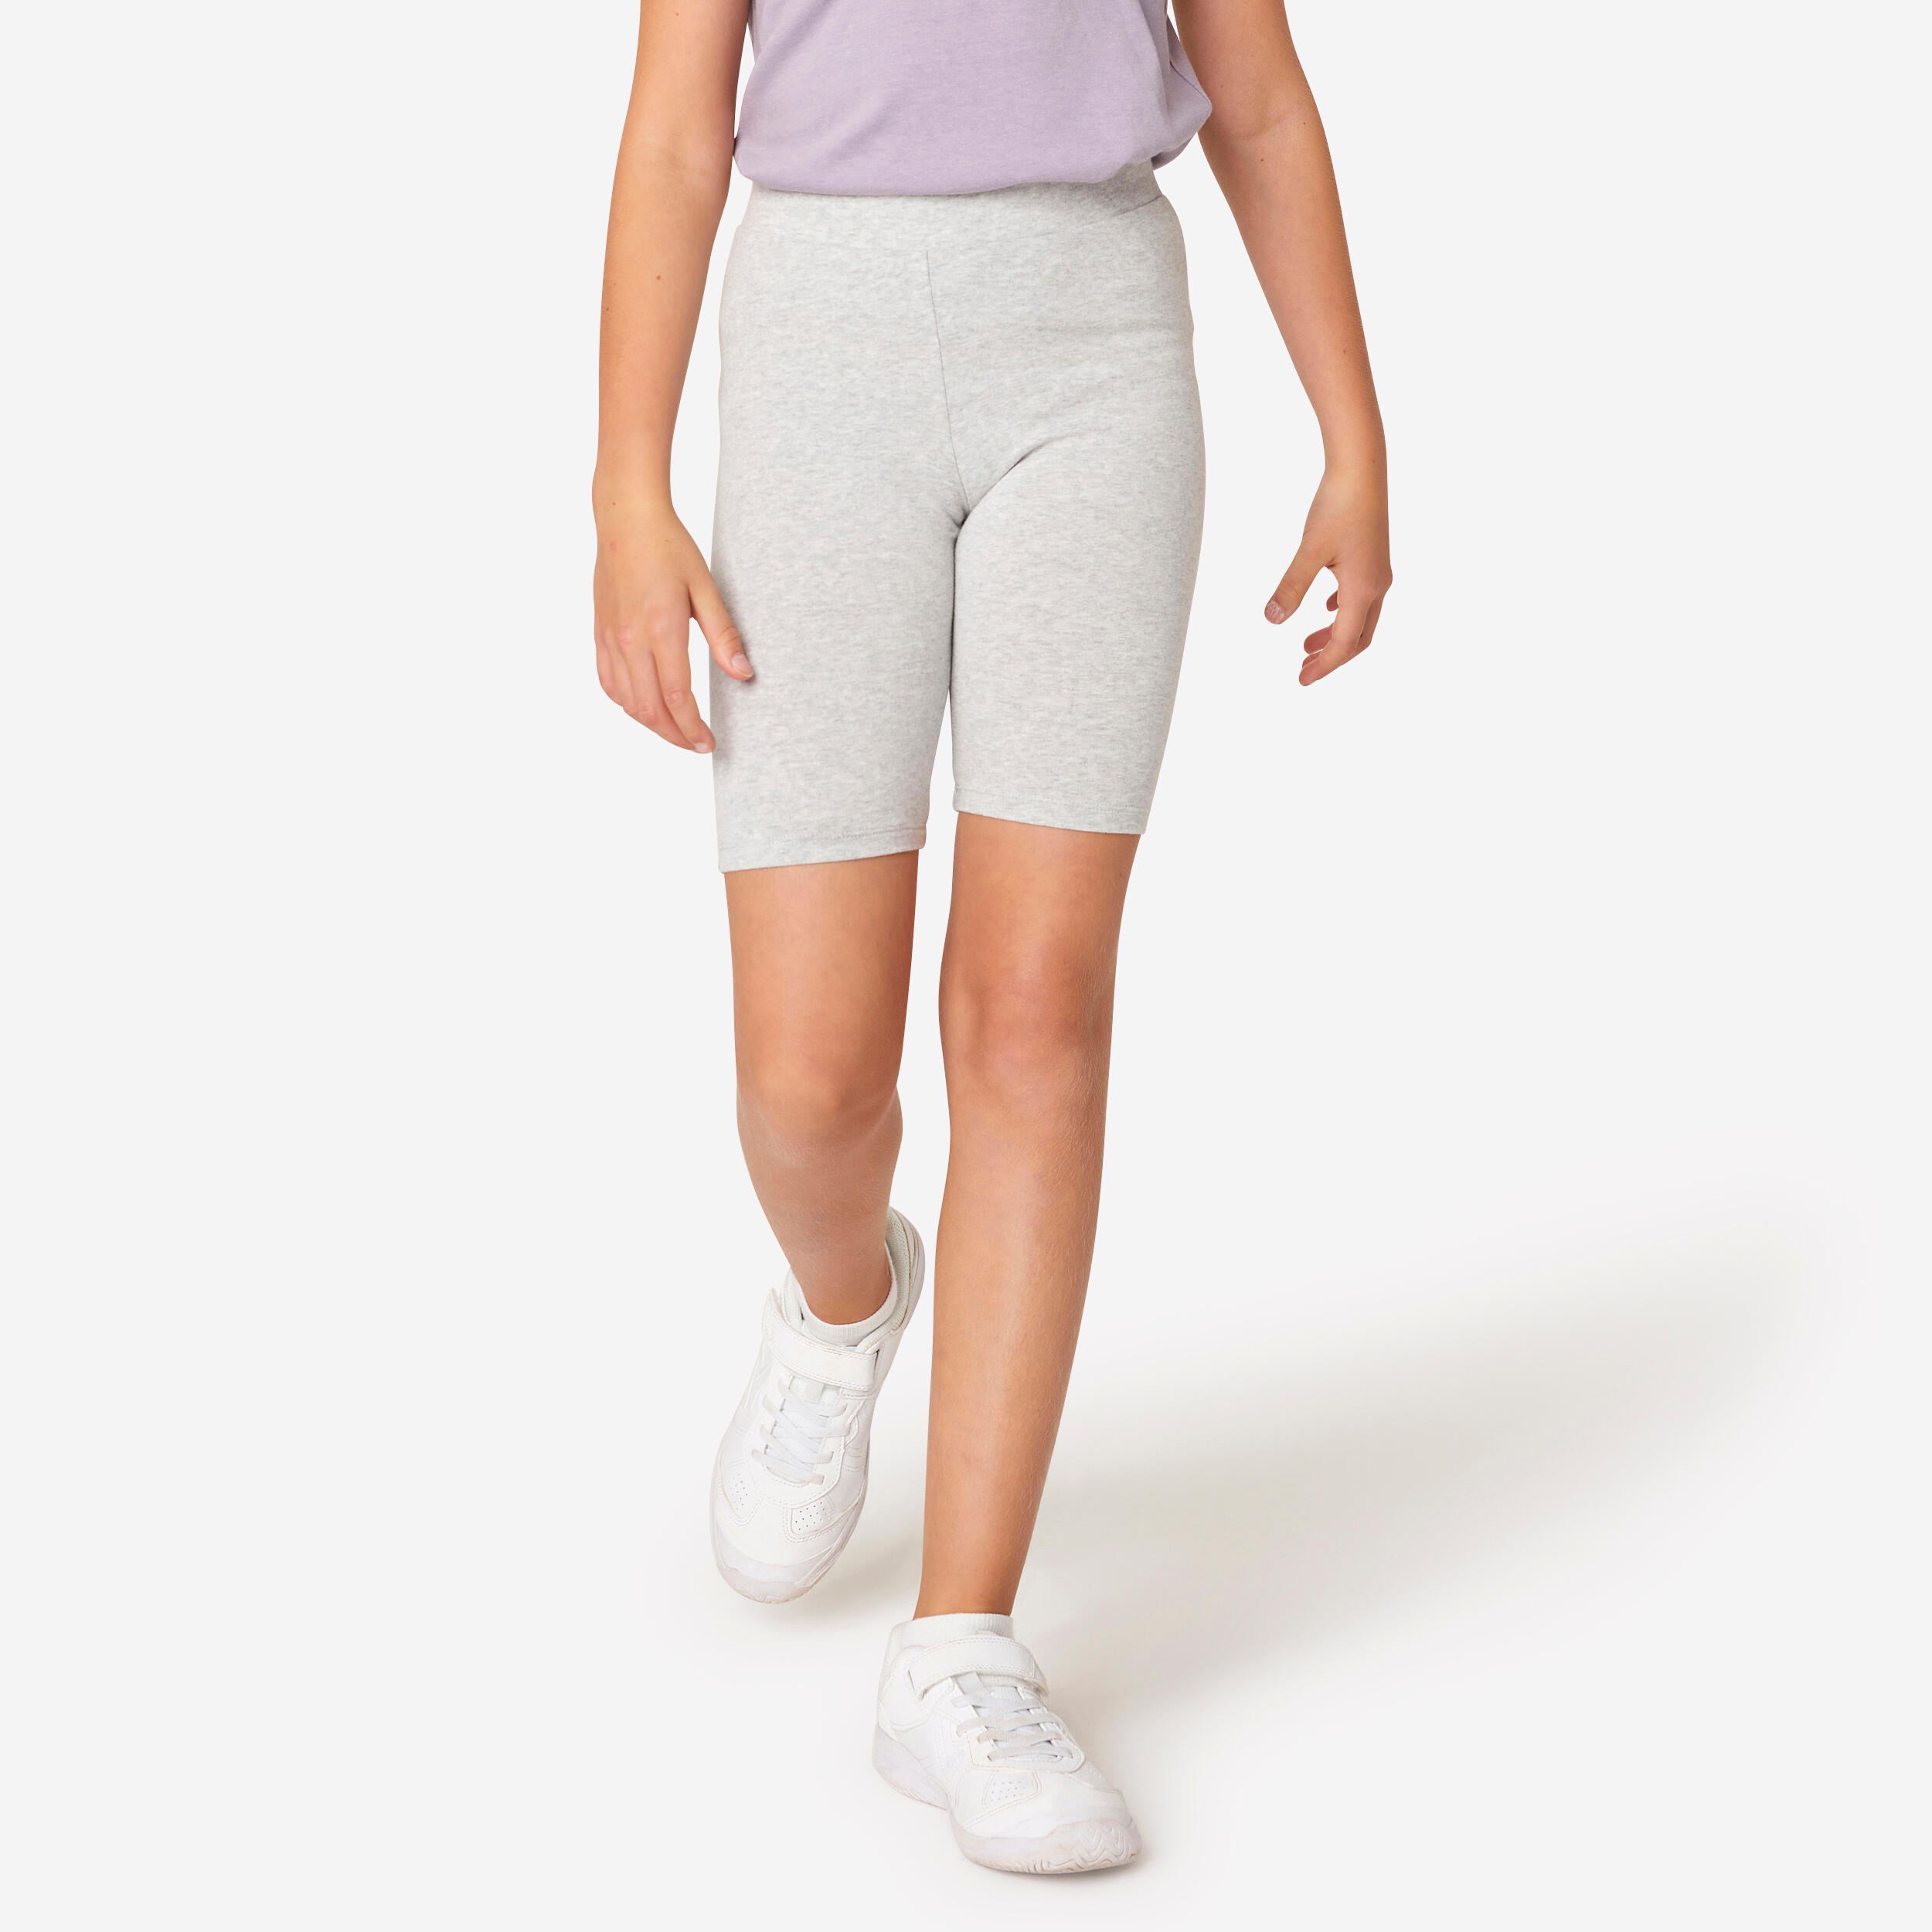 Girls' Cotton Cycling Shorts - Grey 1/4